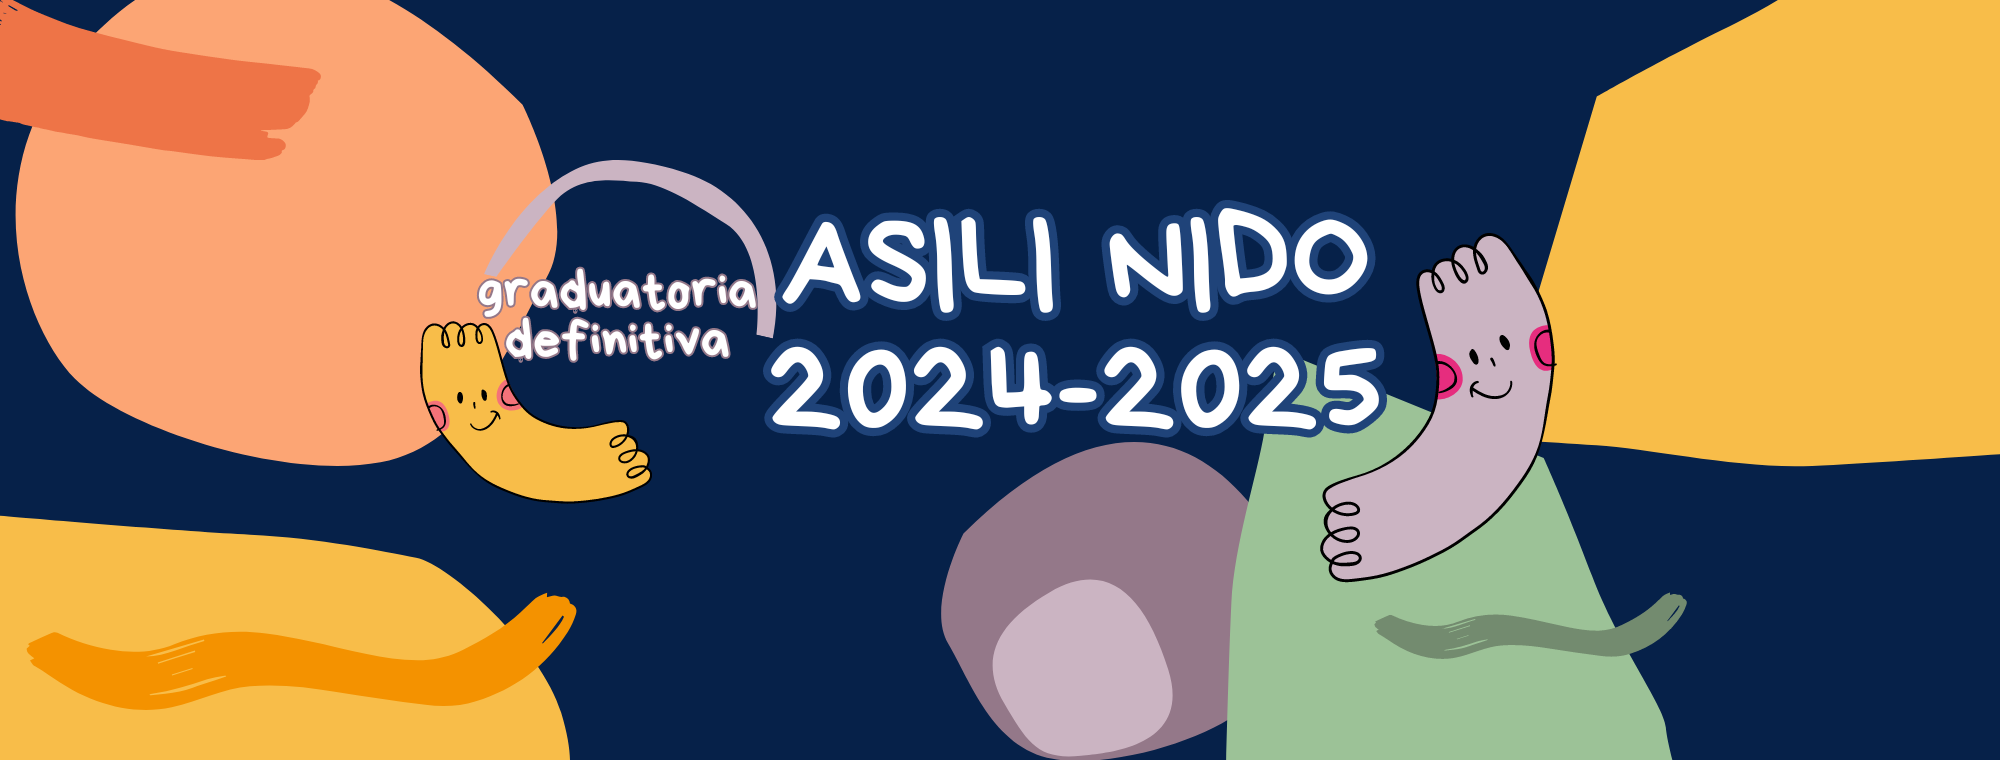 Graduatoria definitiva asili nido 2024/2025